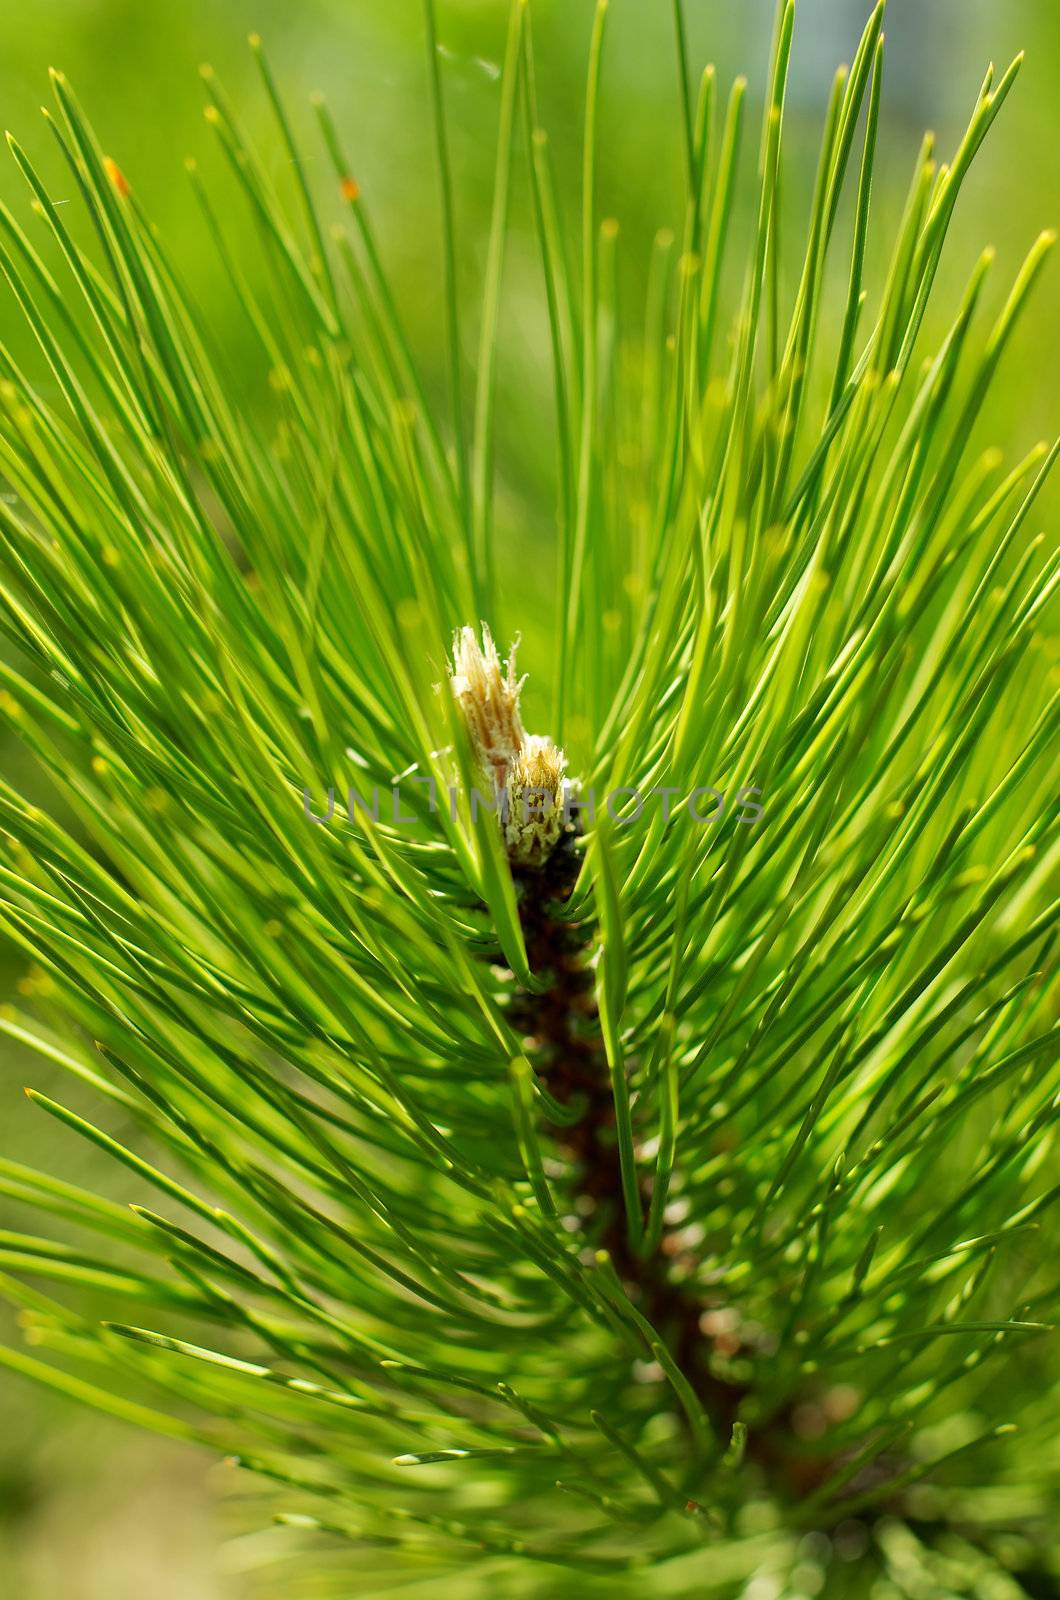 Pine Tree by zhekos